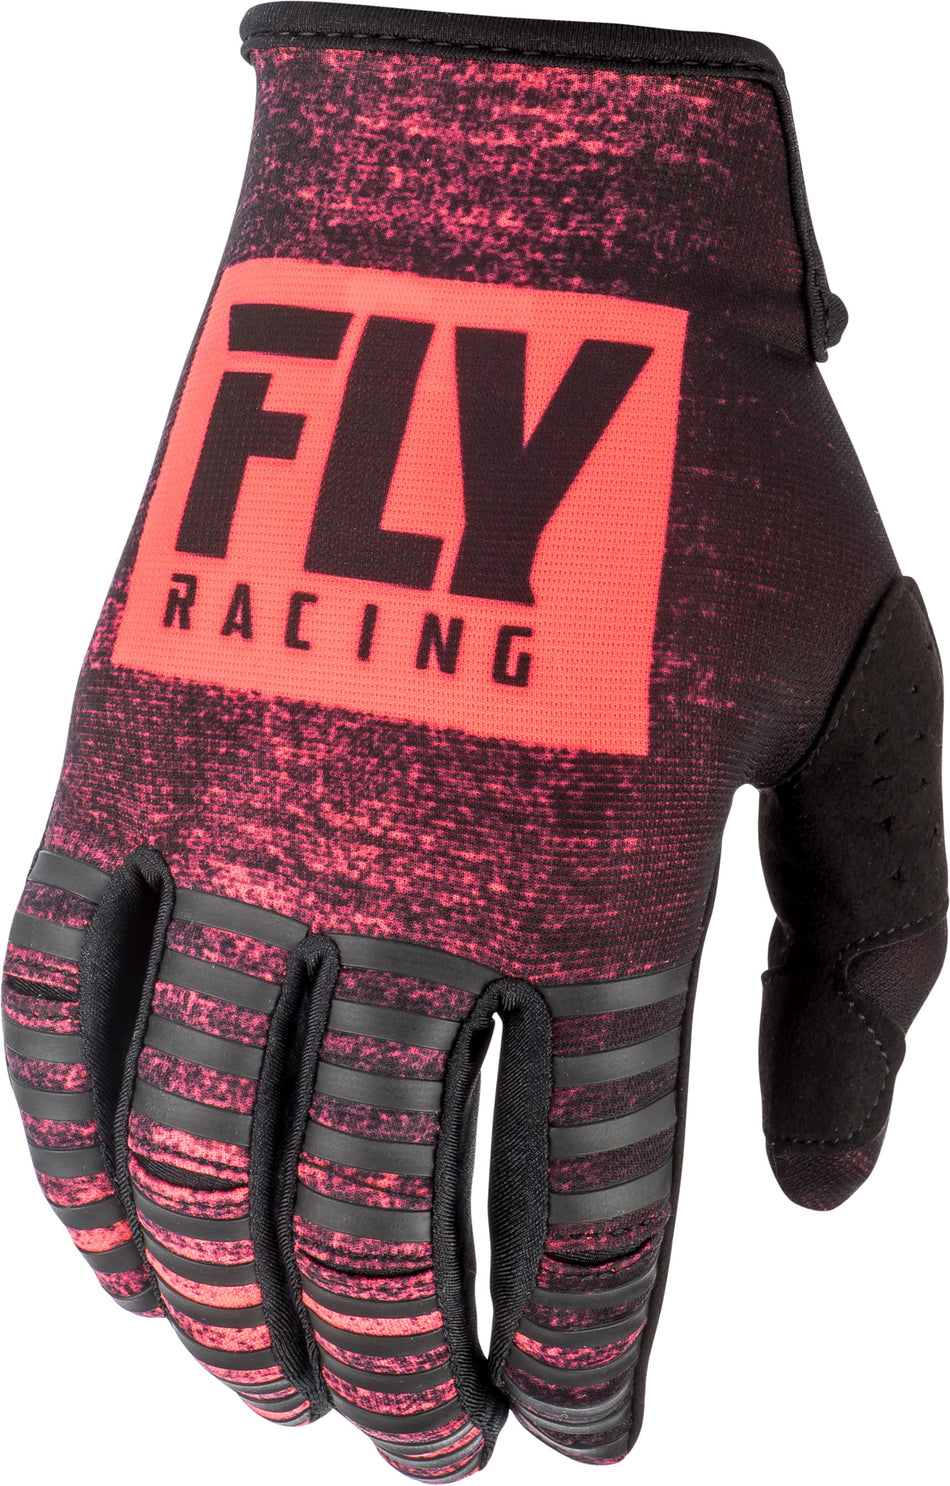 FLY RACING Kinetic Noiz Gloves Neon Red/Black Sz 06 372-51206